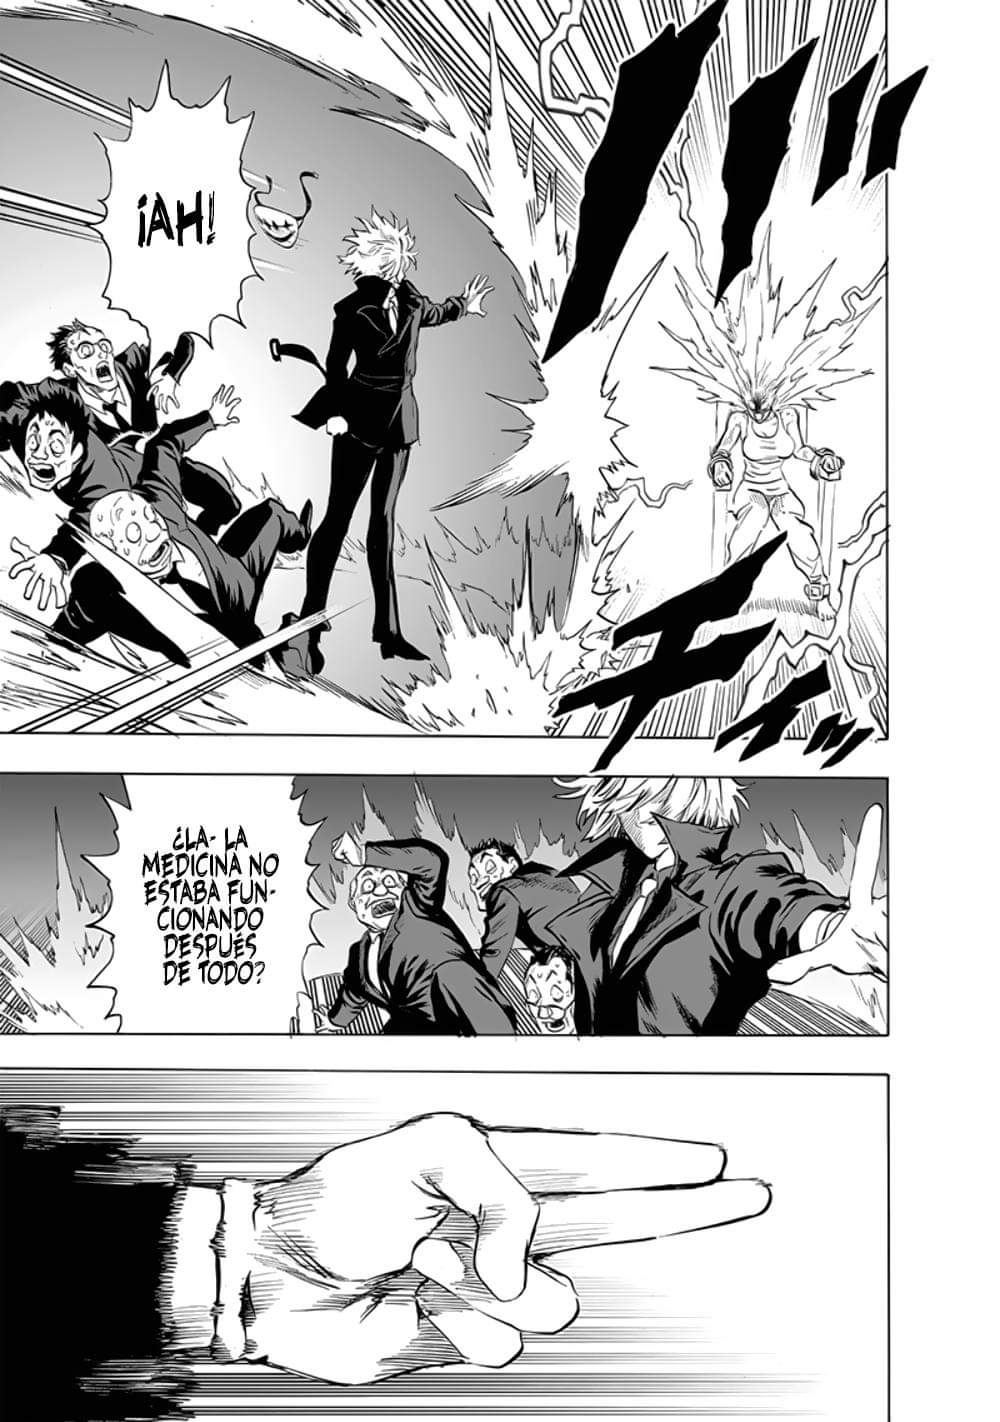 Manga One Punch Man 220 disponible en la web de ONE